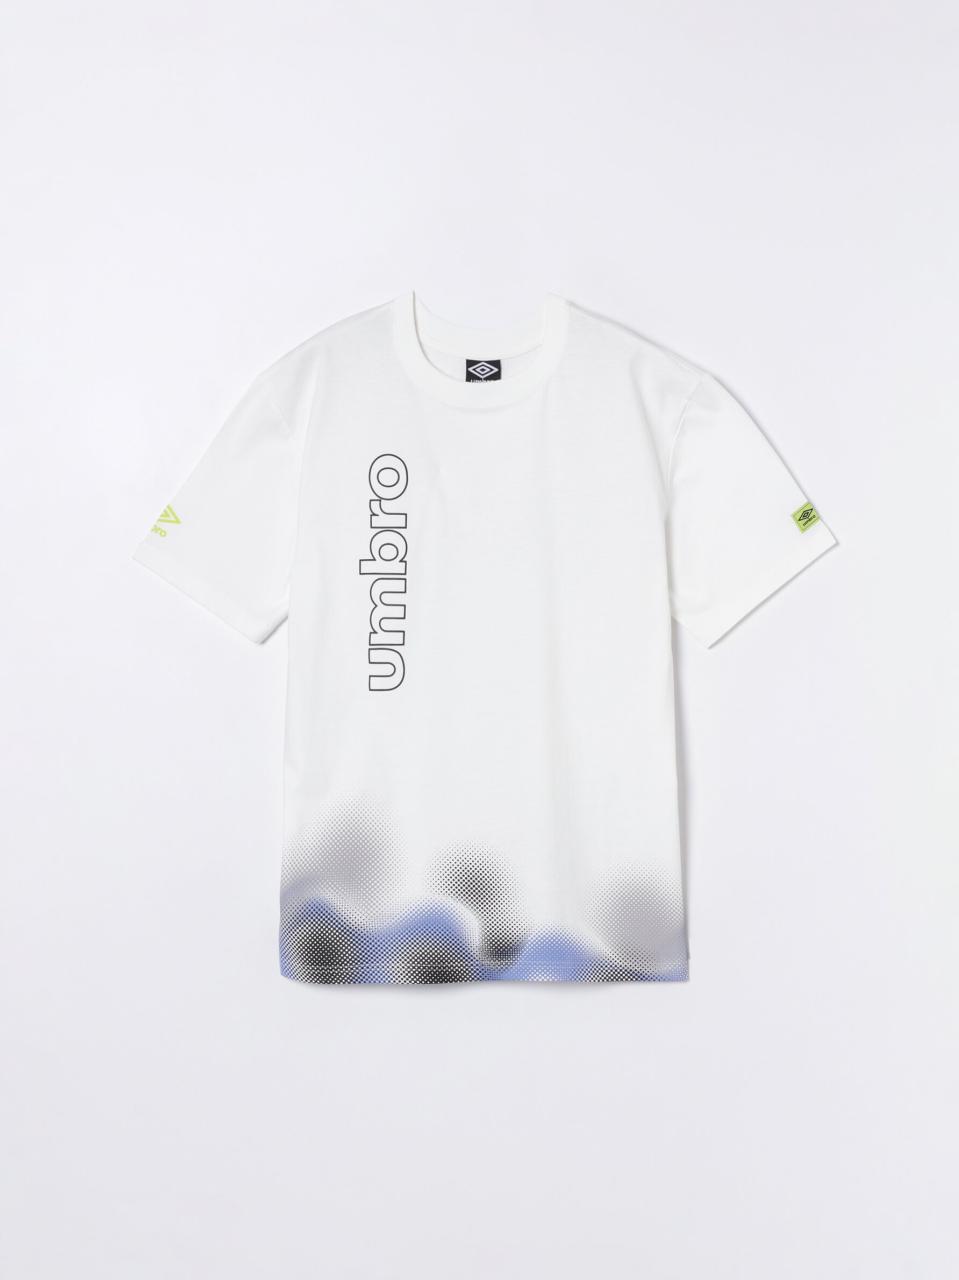 Umbro X Lefties Print T-Shirt - Collabs - Clothing - Man - | Lefties Spain